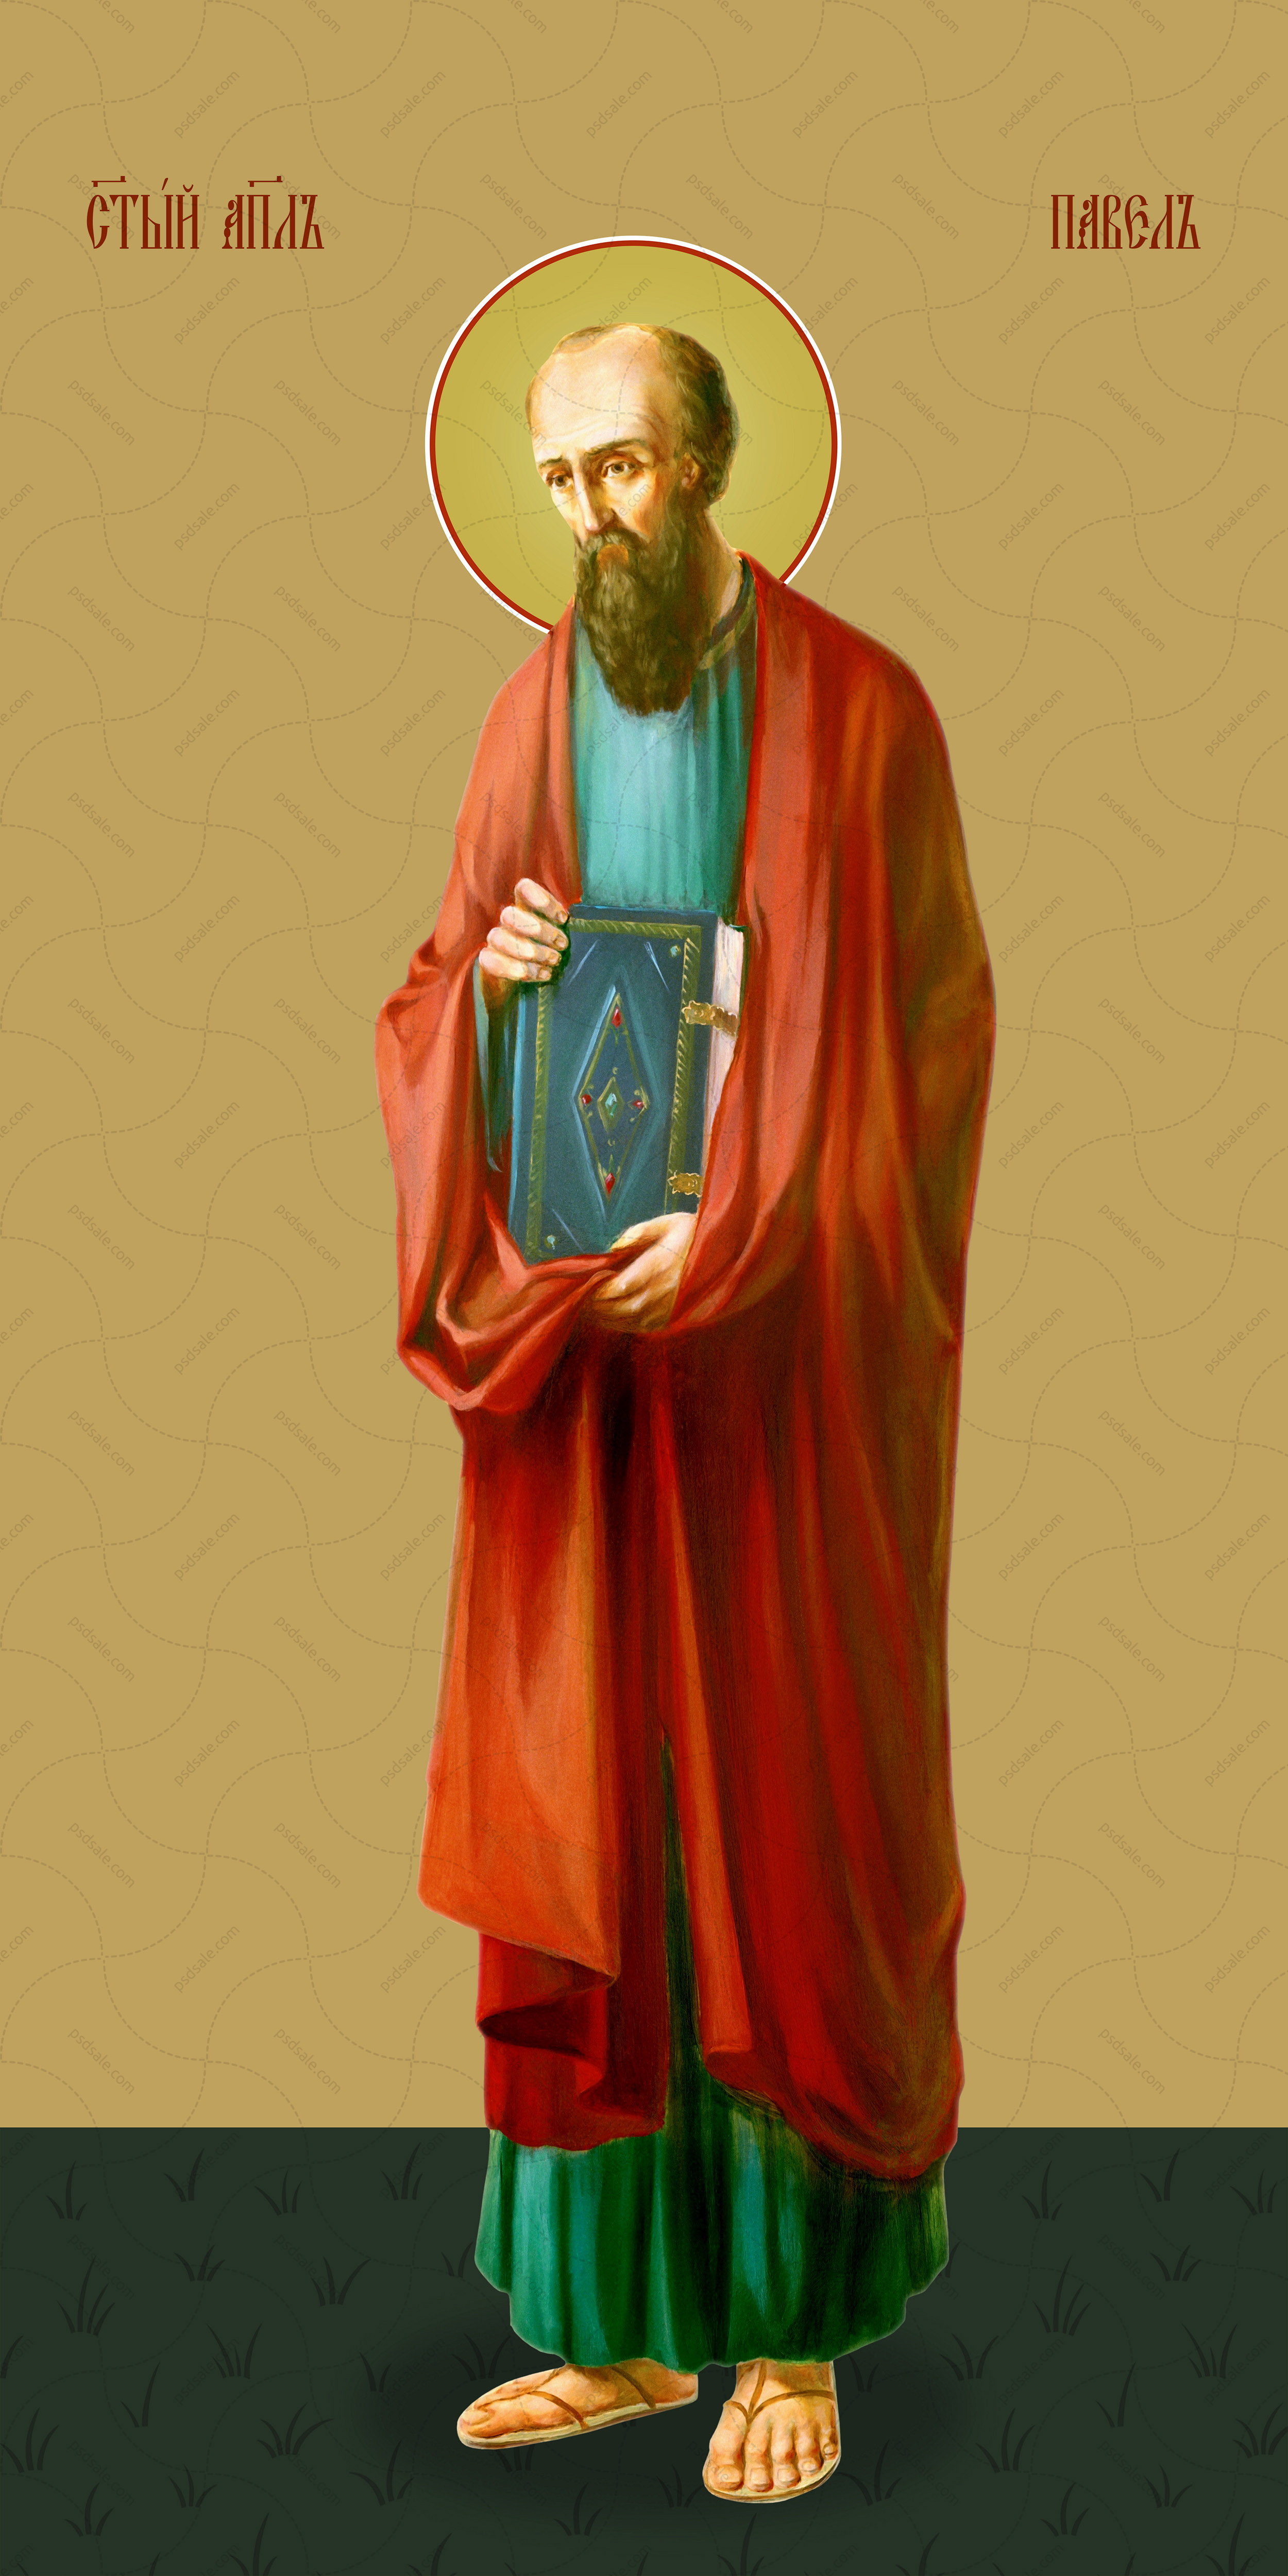 Мерная икона, Павел, святой апостол